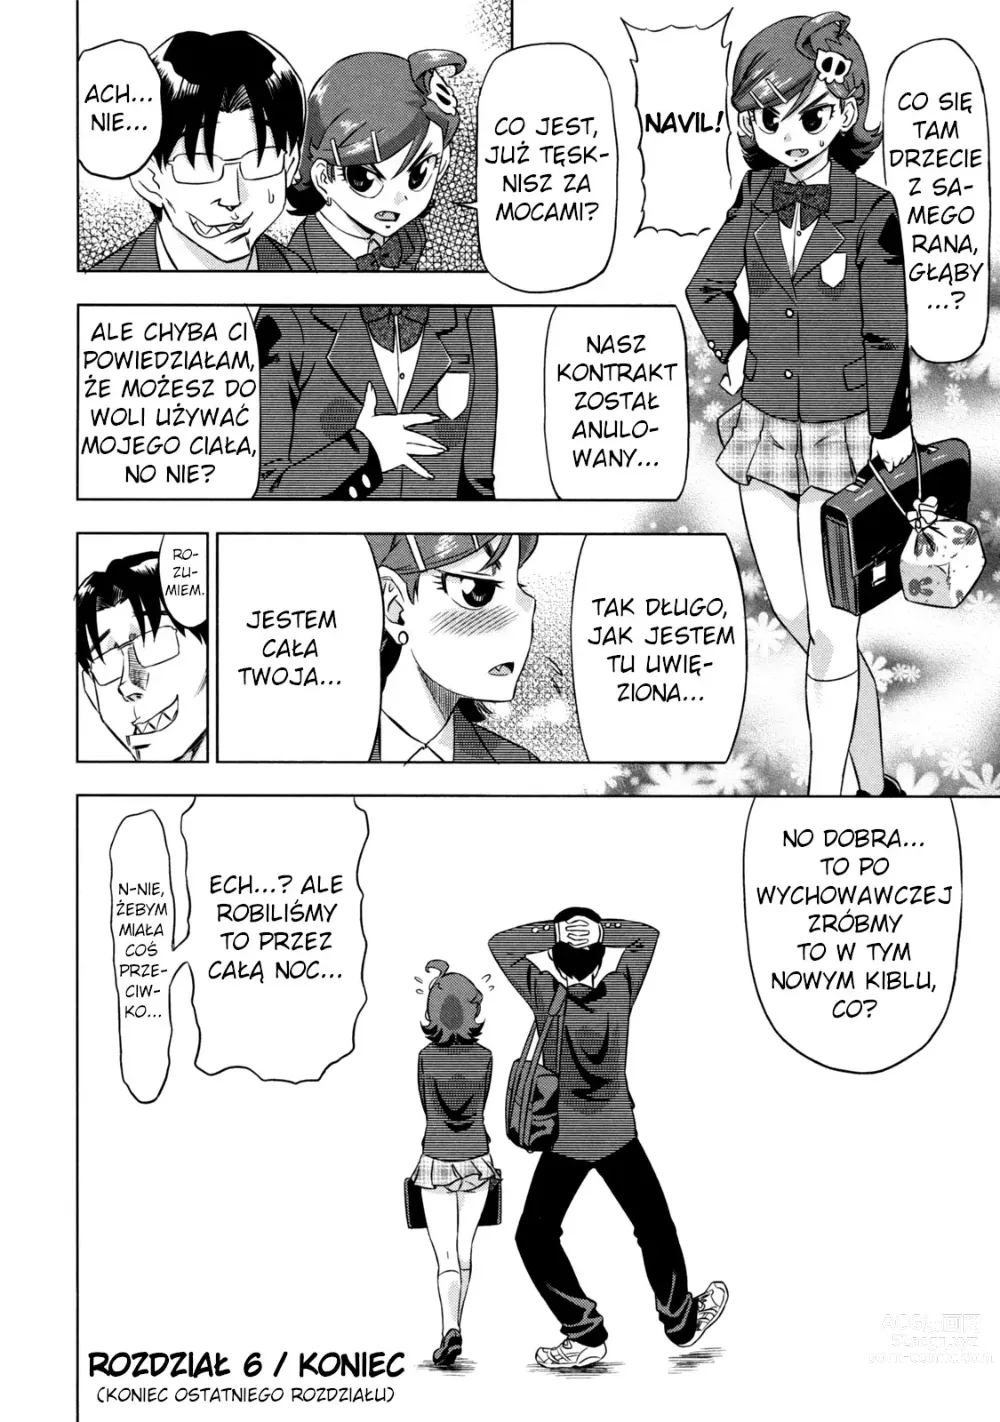 Page 202 of manga Devi Navi!